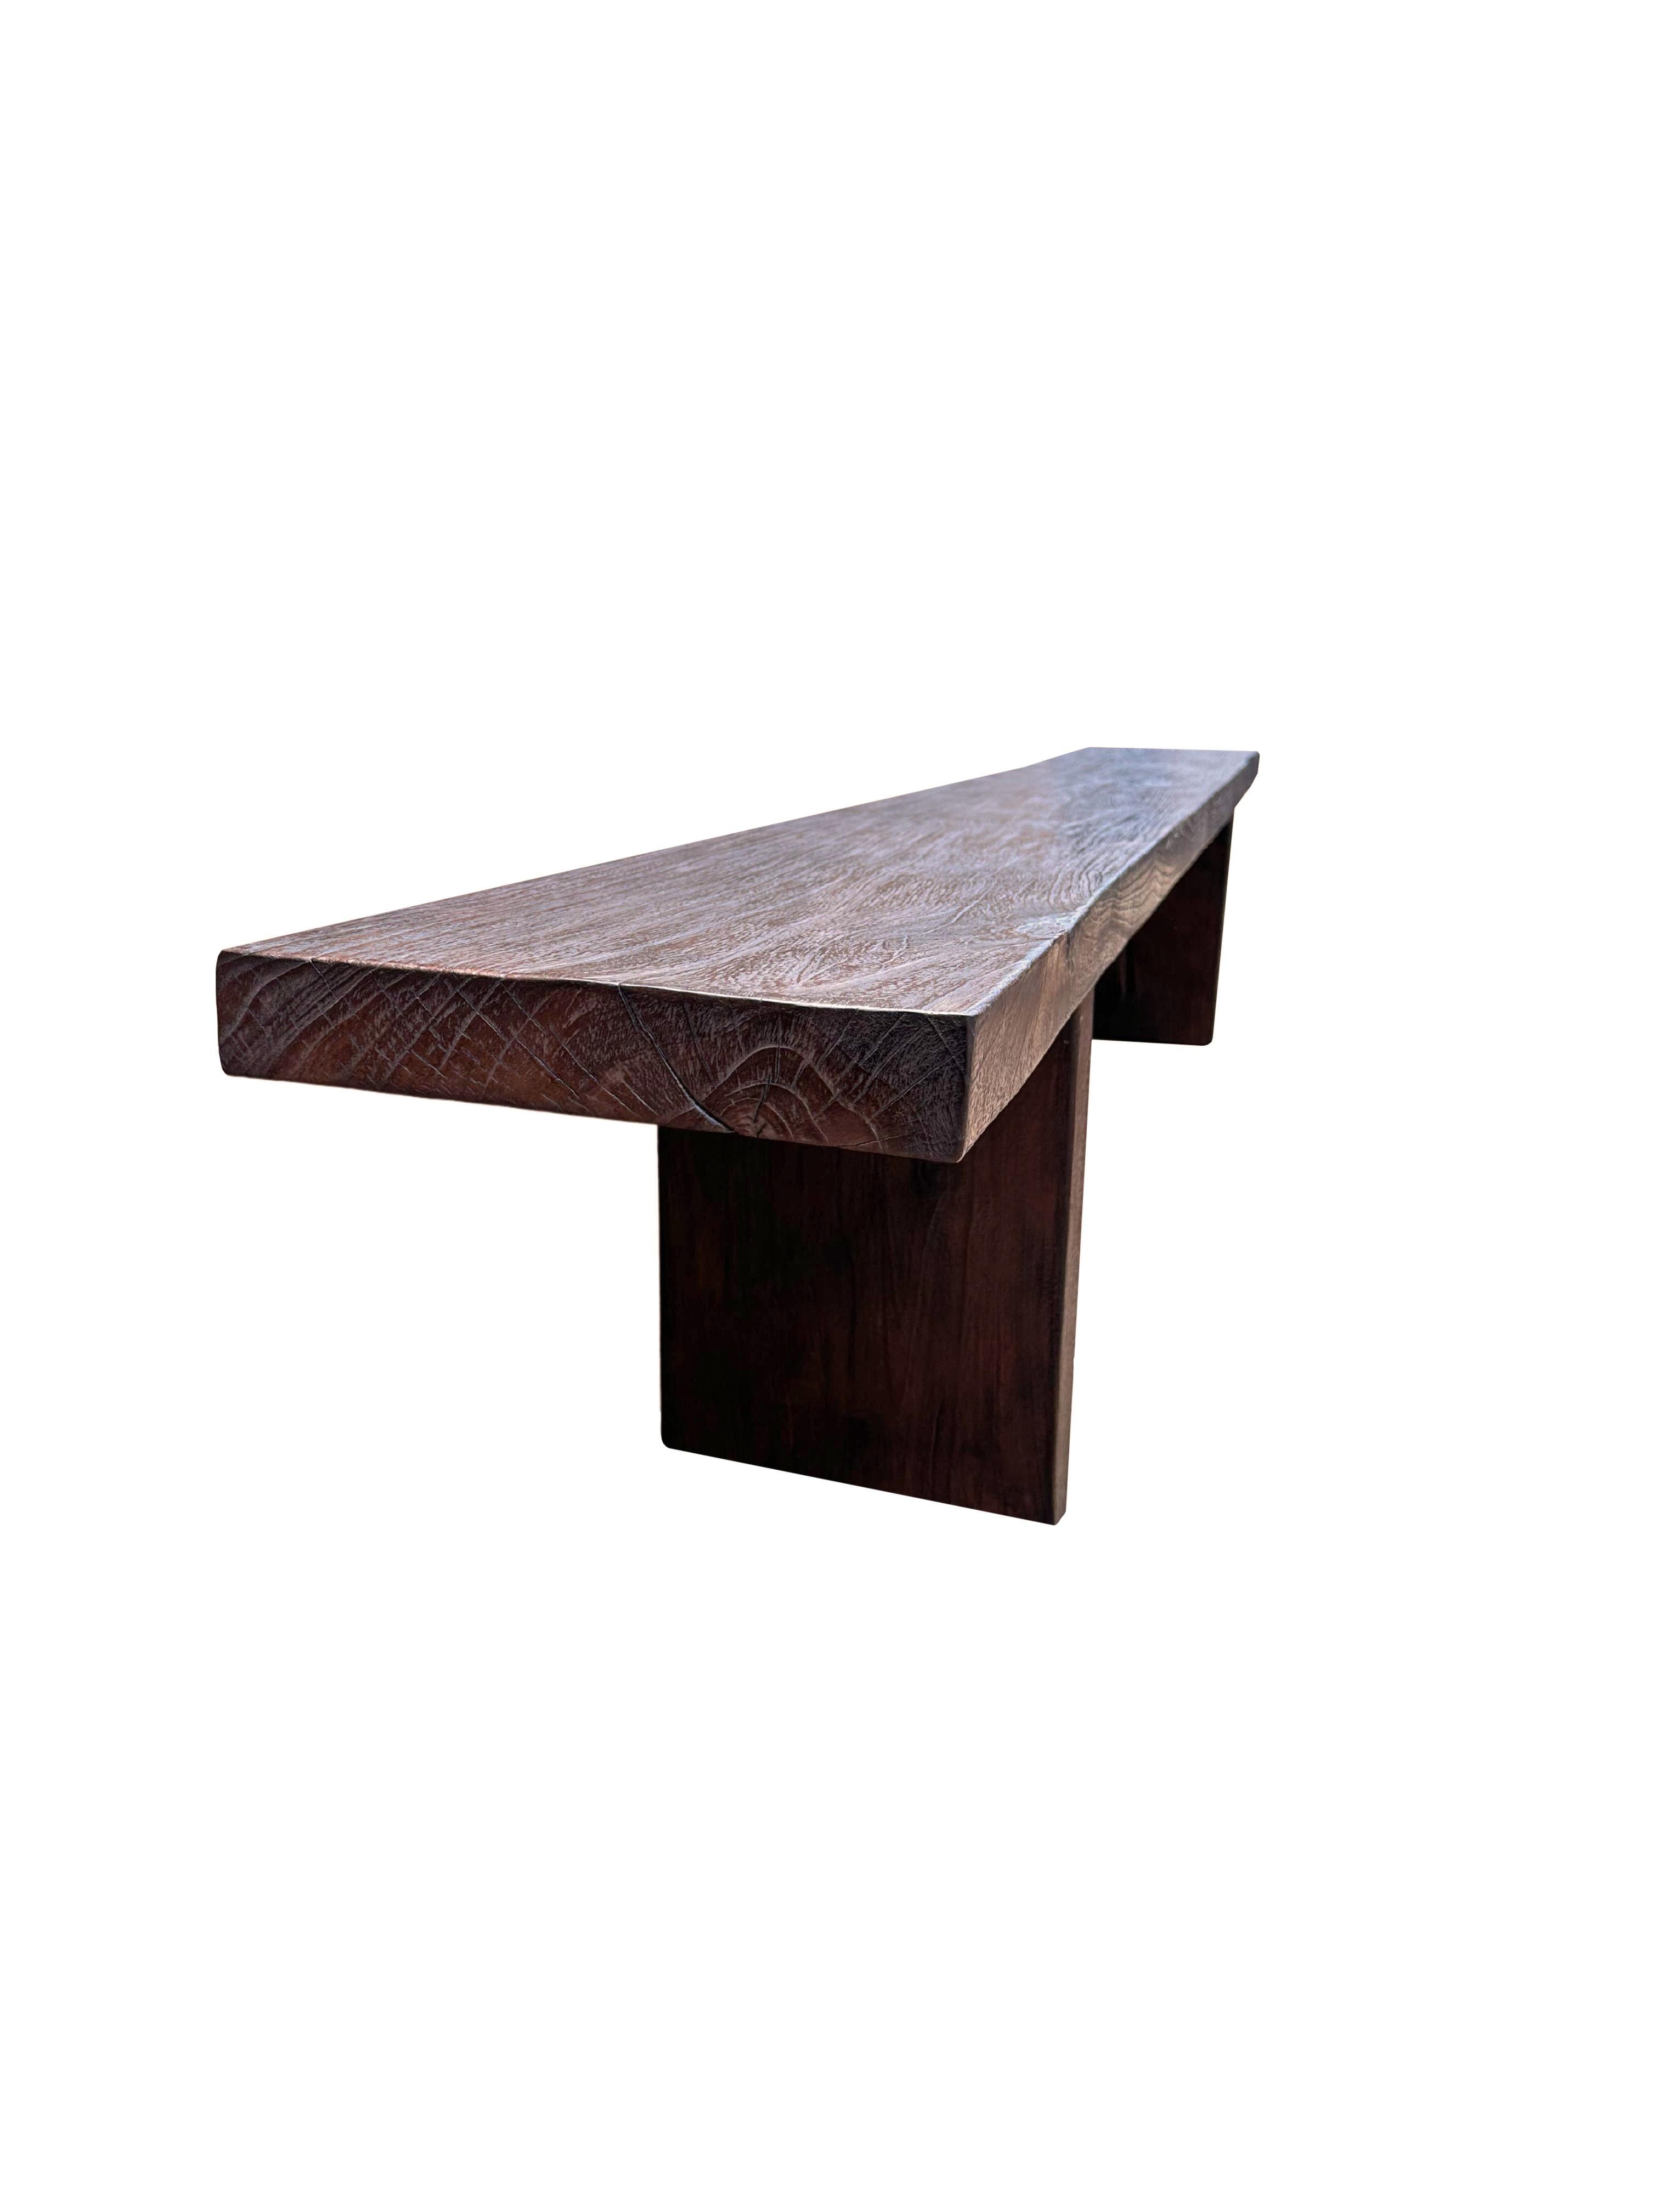 Sculptural Teak Wood Bench Modern Organic, Stunning Textures, Espresso Finish For Sale 1